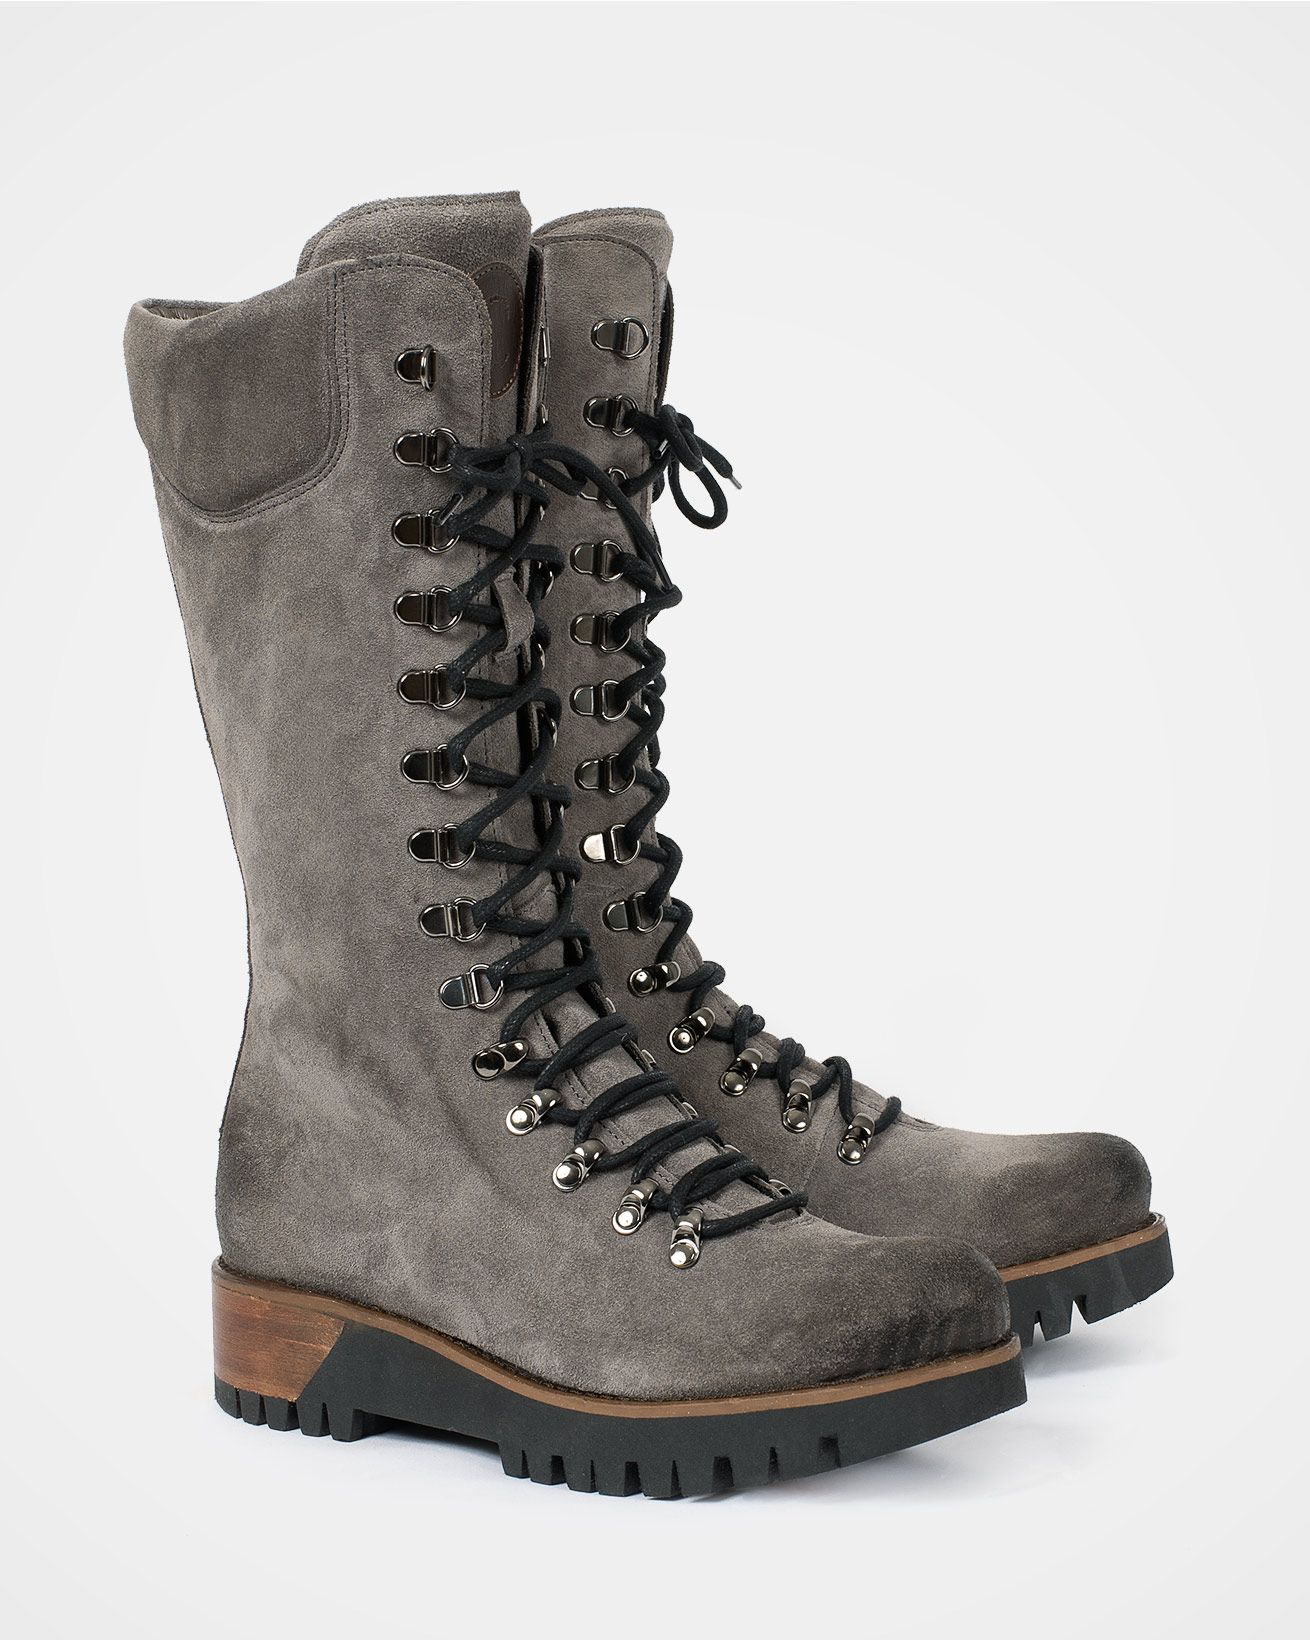 7082_wilderness-boots_grey_pair.jpg